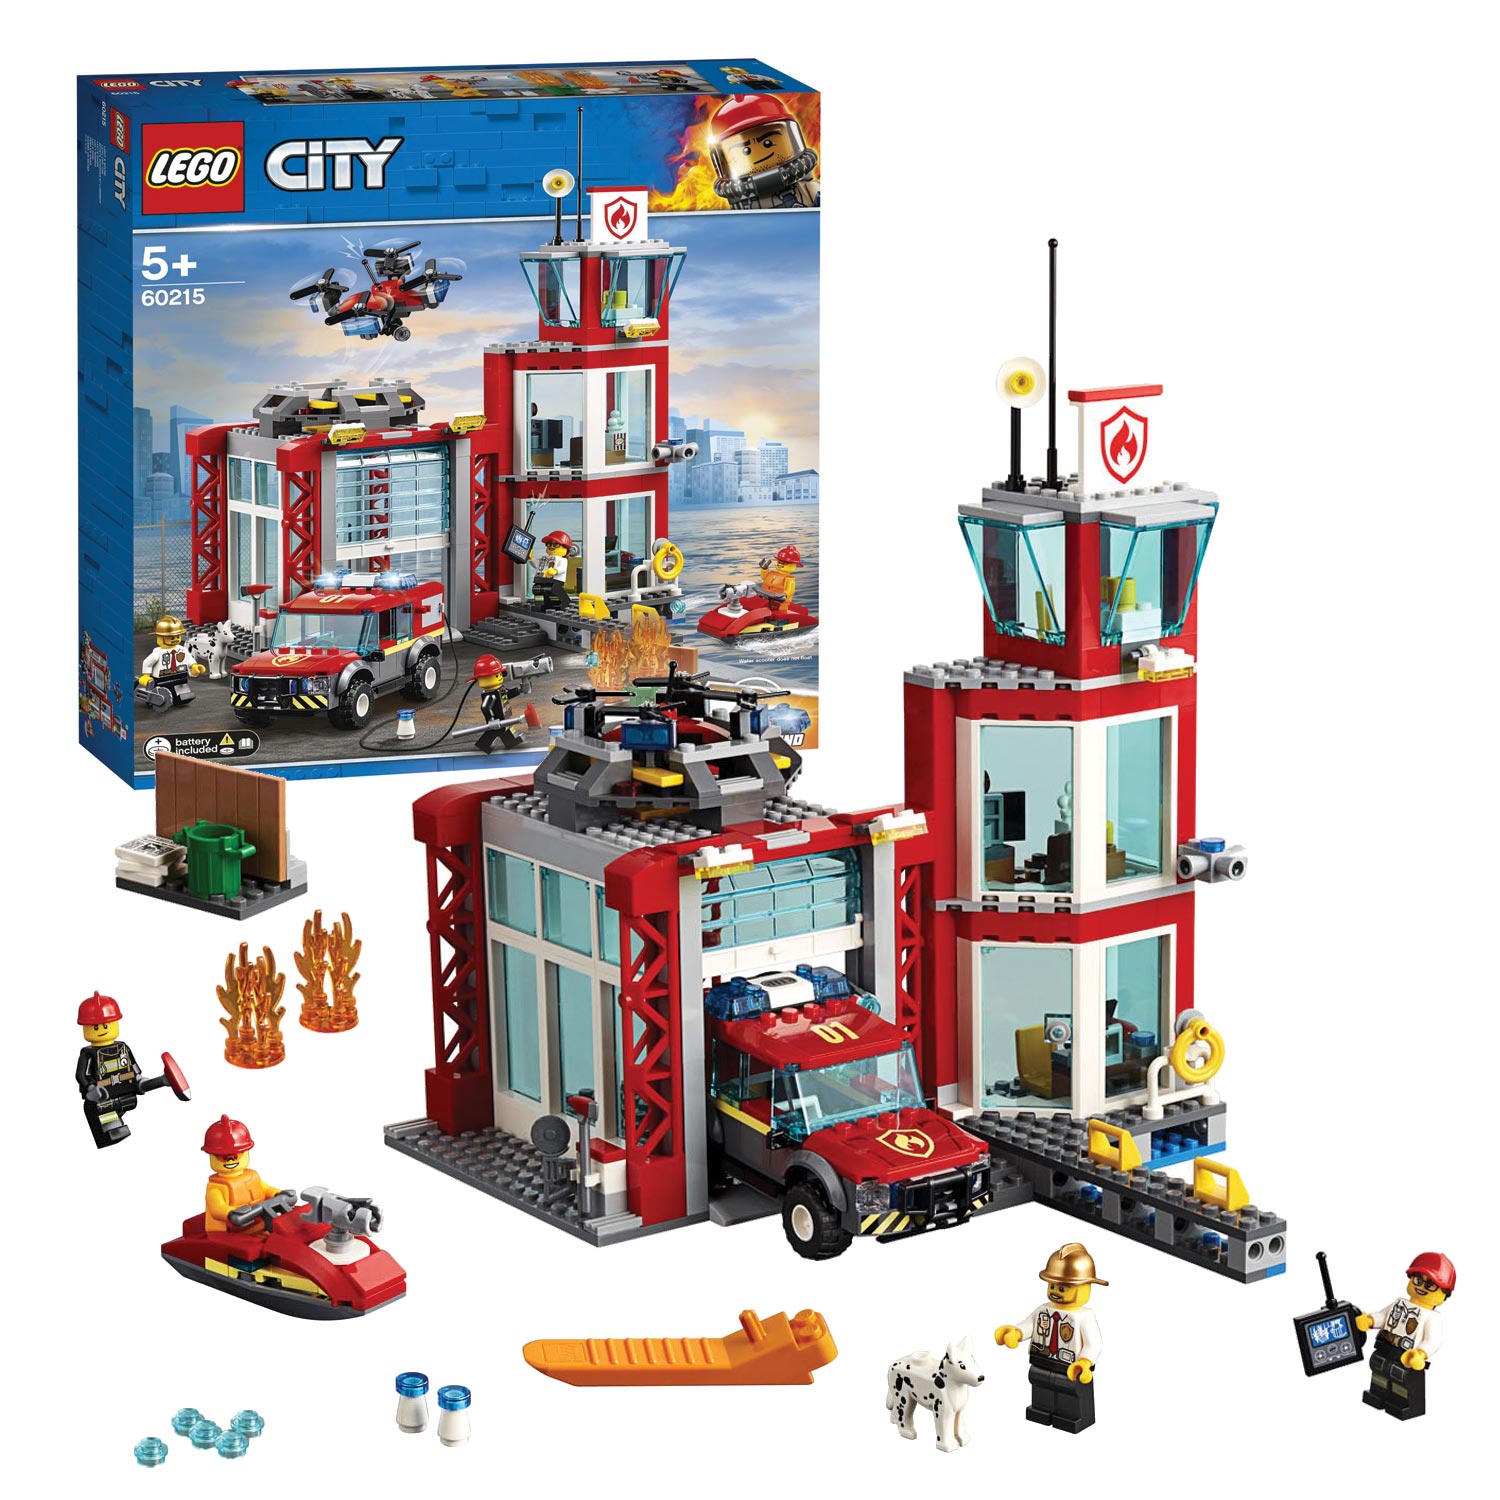 jeans Welkom Pygmalion LEGO City 60215 Brandweerkazerne | Thimble Toys